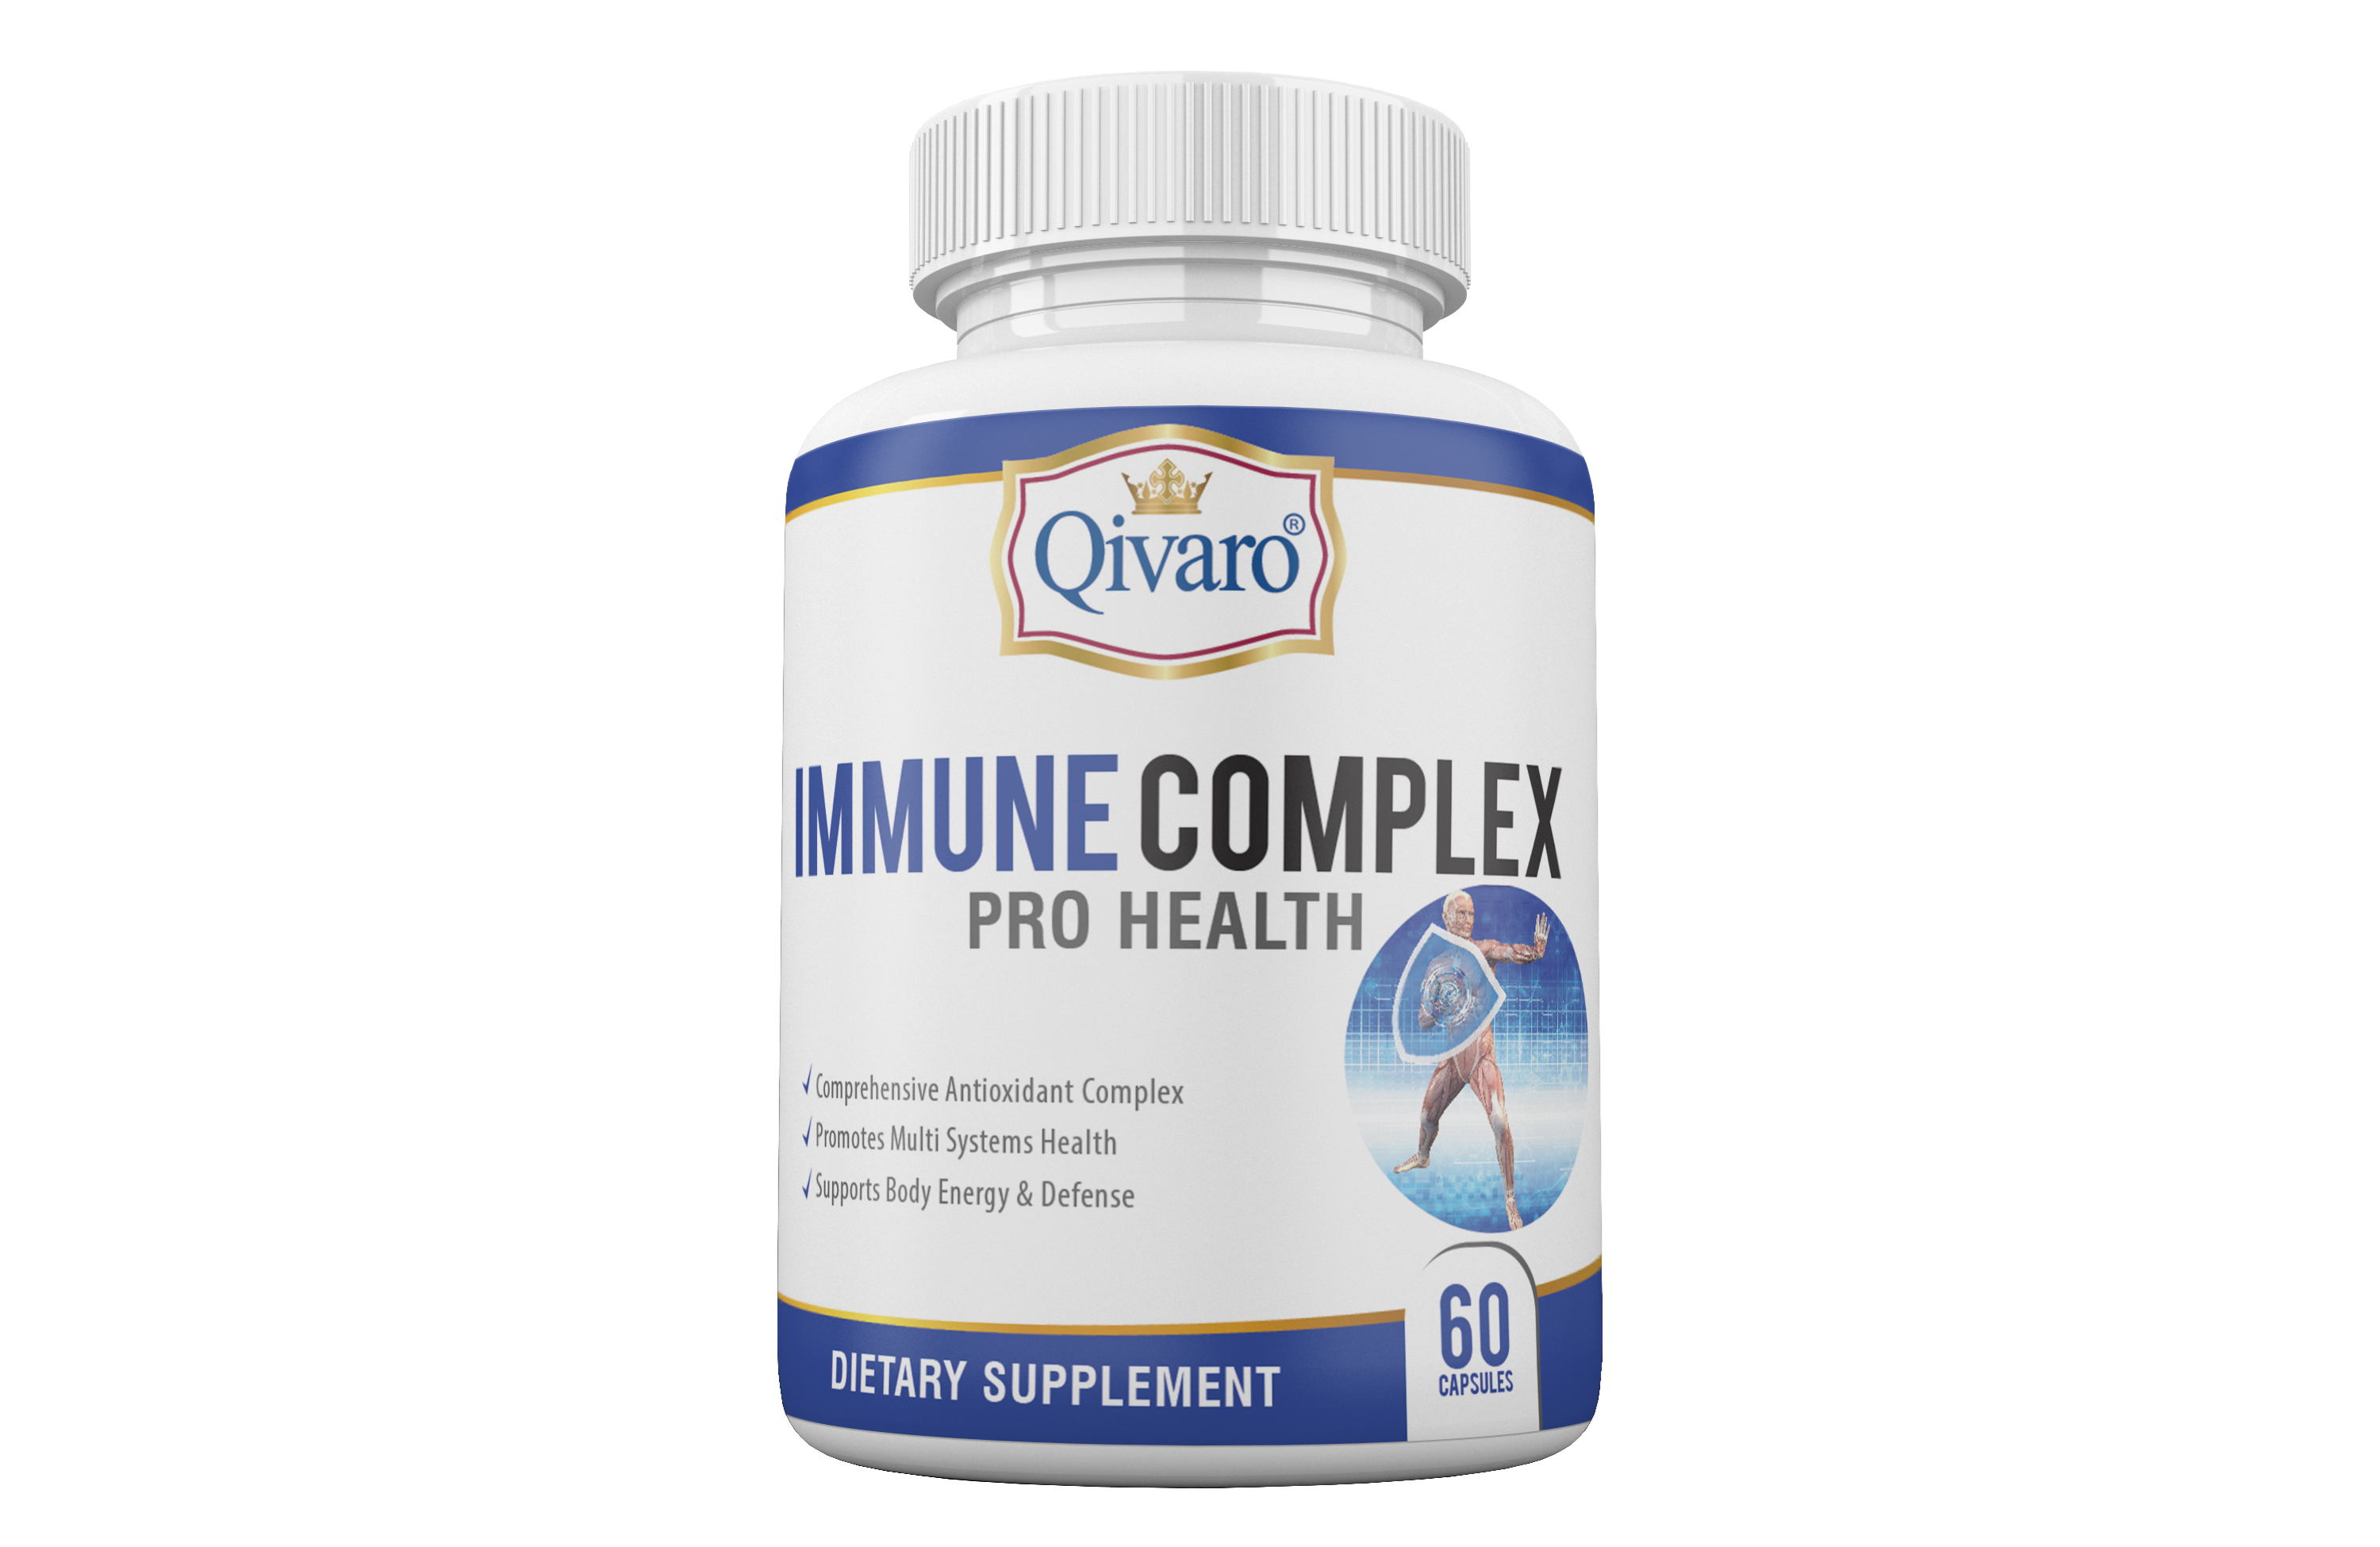 QIH05_15 抗疫孖寶 - 免疫清肺寶 | IMMUNE RESPIRATORY COMPLEX PRO HEALTH by QIVARO